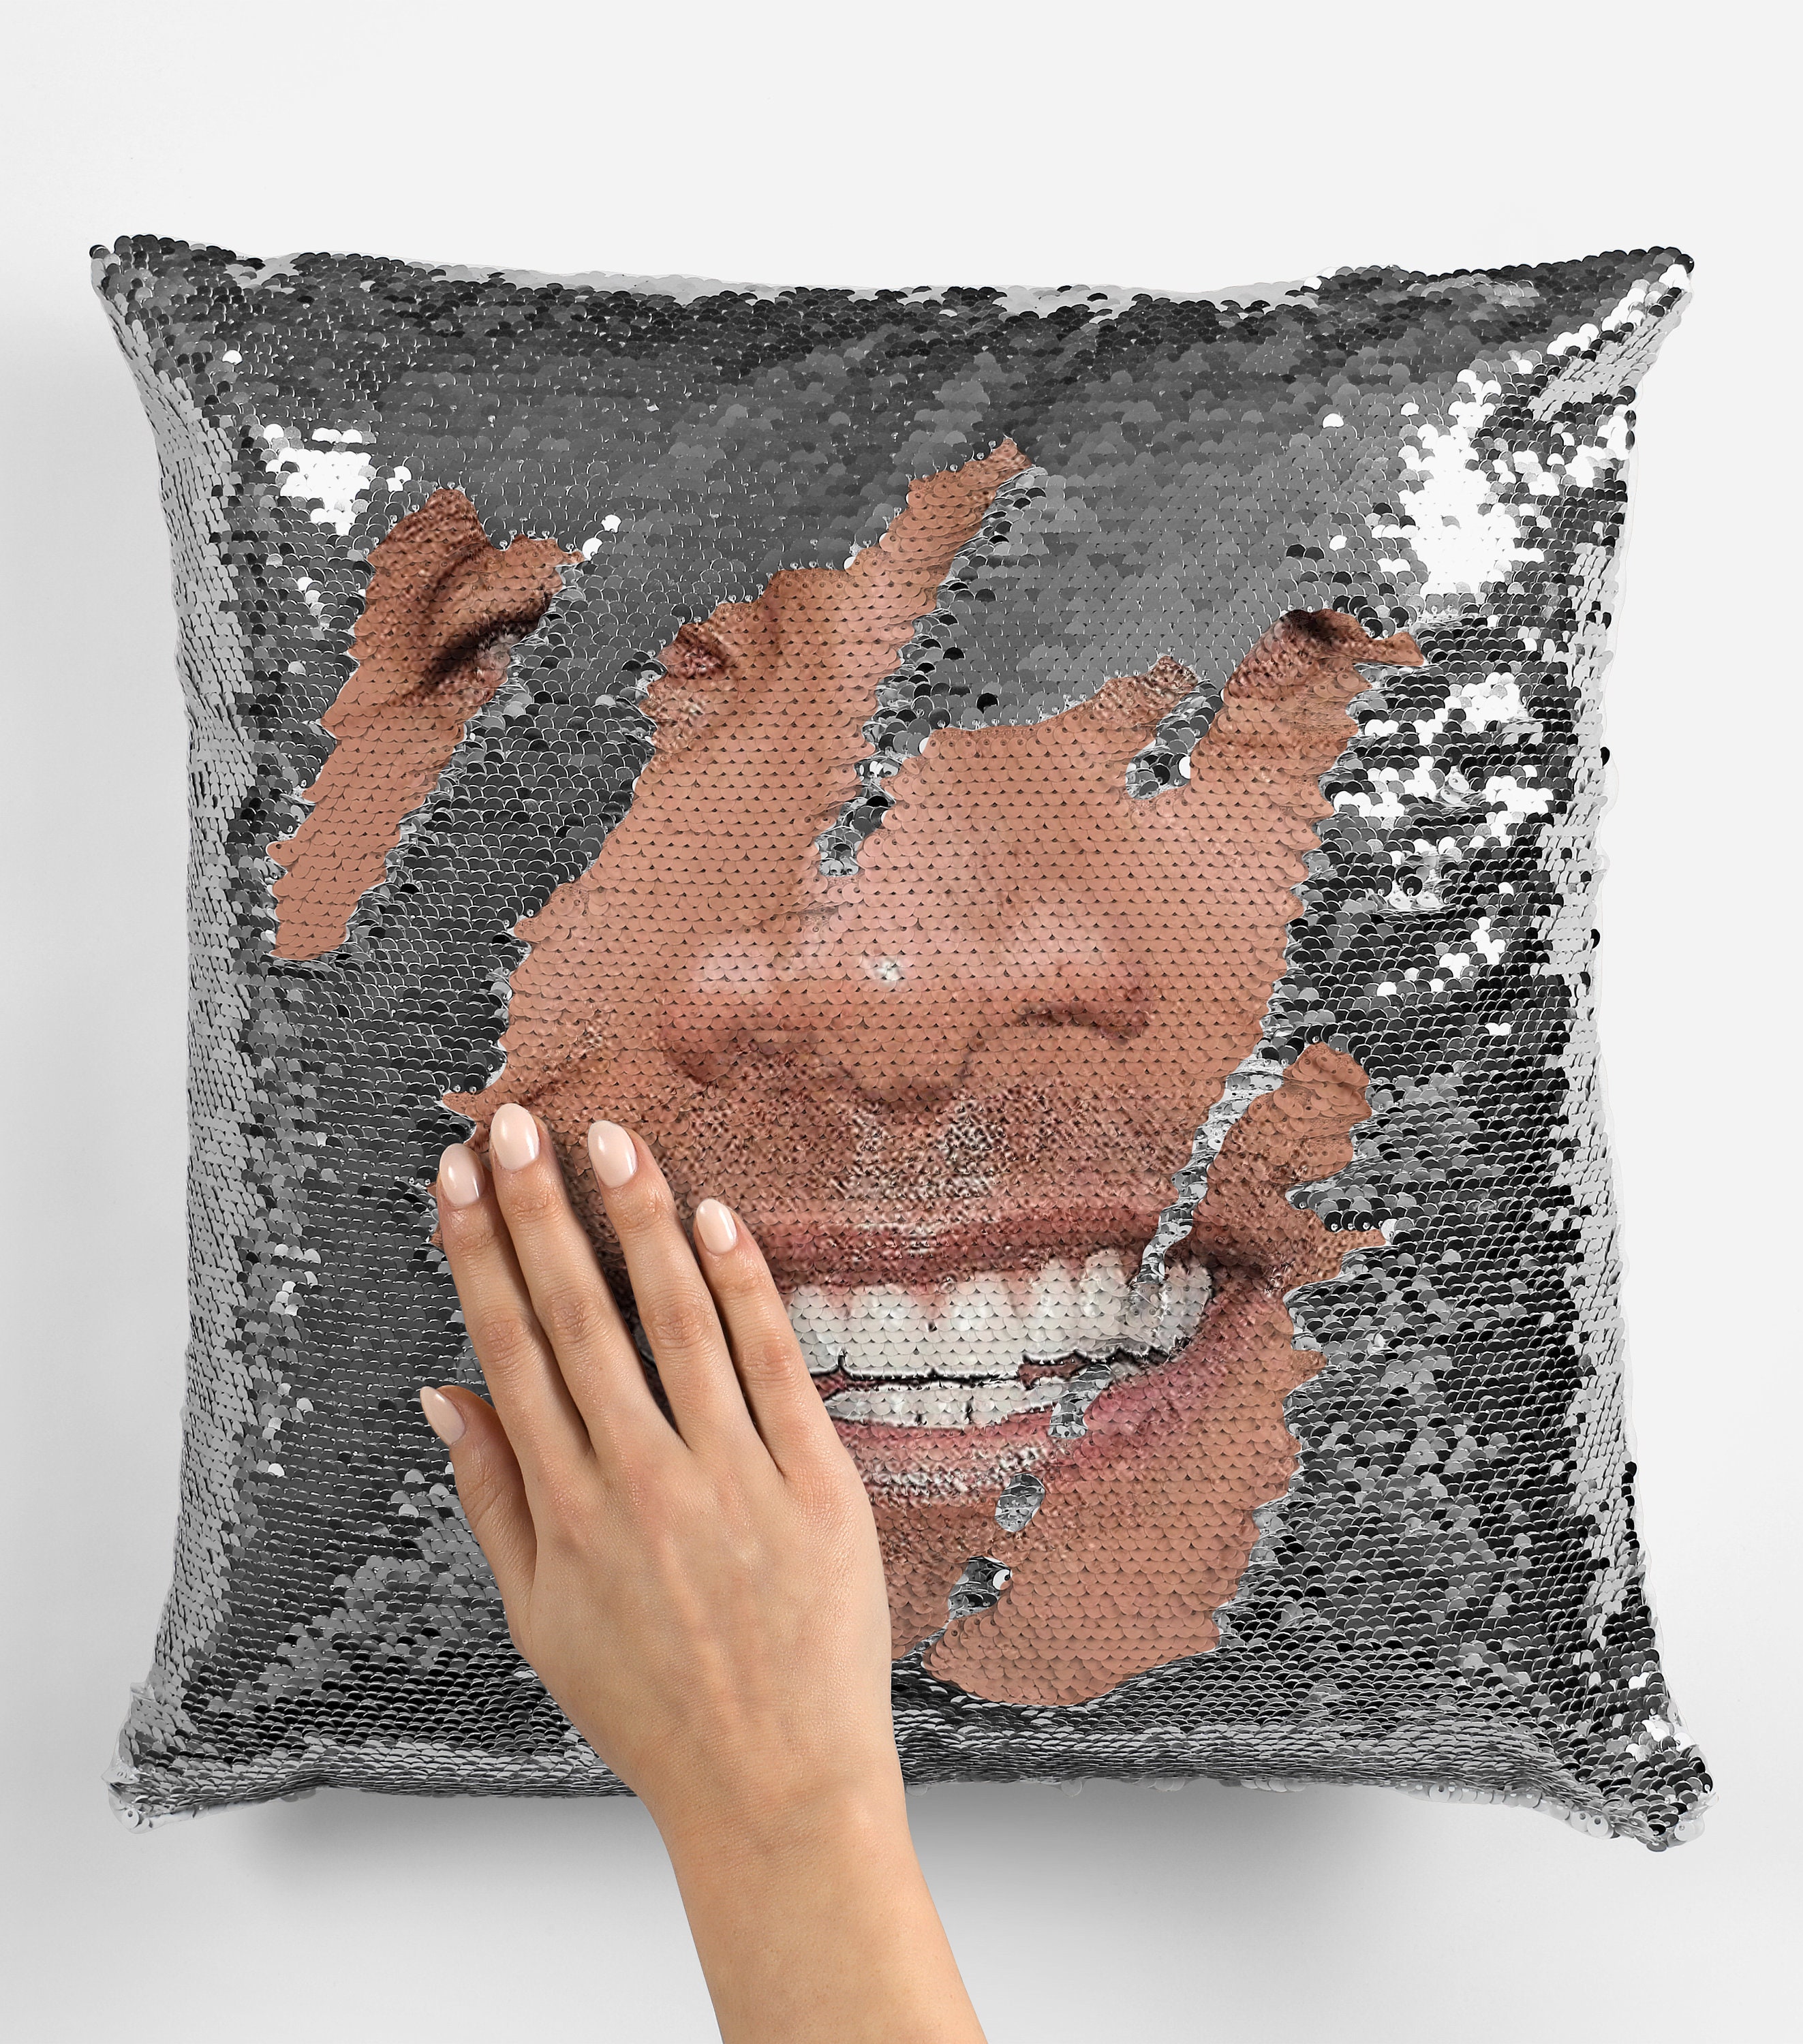 The Rock Meme Face Sequin Pillow Cover Funny the Rock Face 